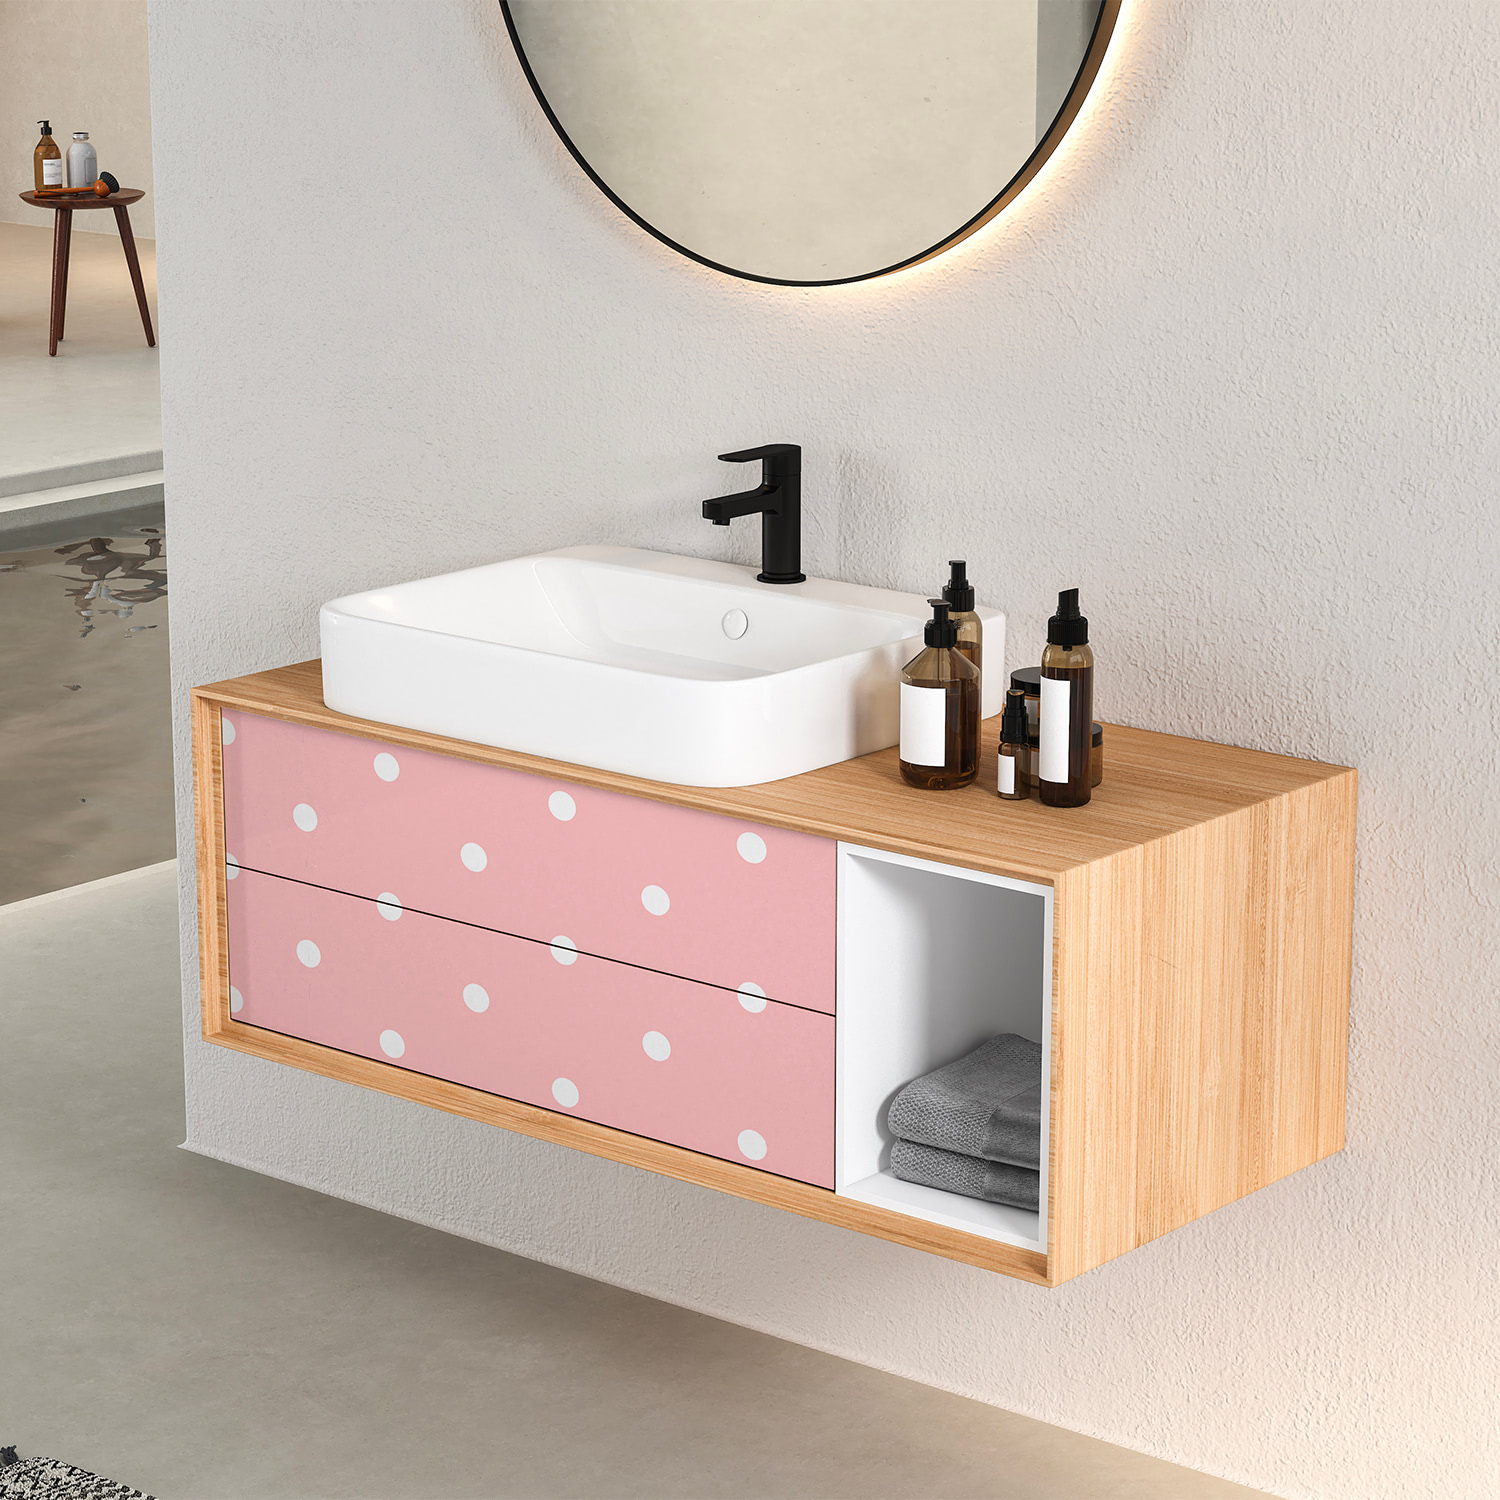 PP60-meuble-papier-peint-adhesif-decoratif-revetement-vinyle-motifs-mini-pois blanc:rose-renovation-meuble-mur-mini